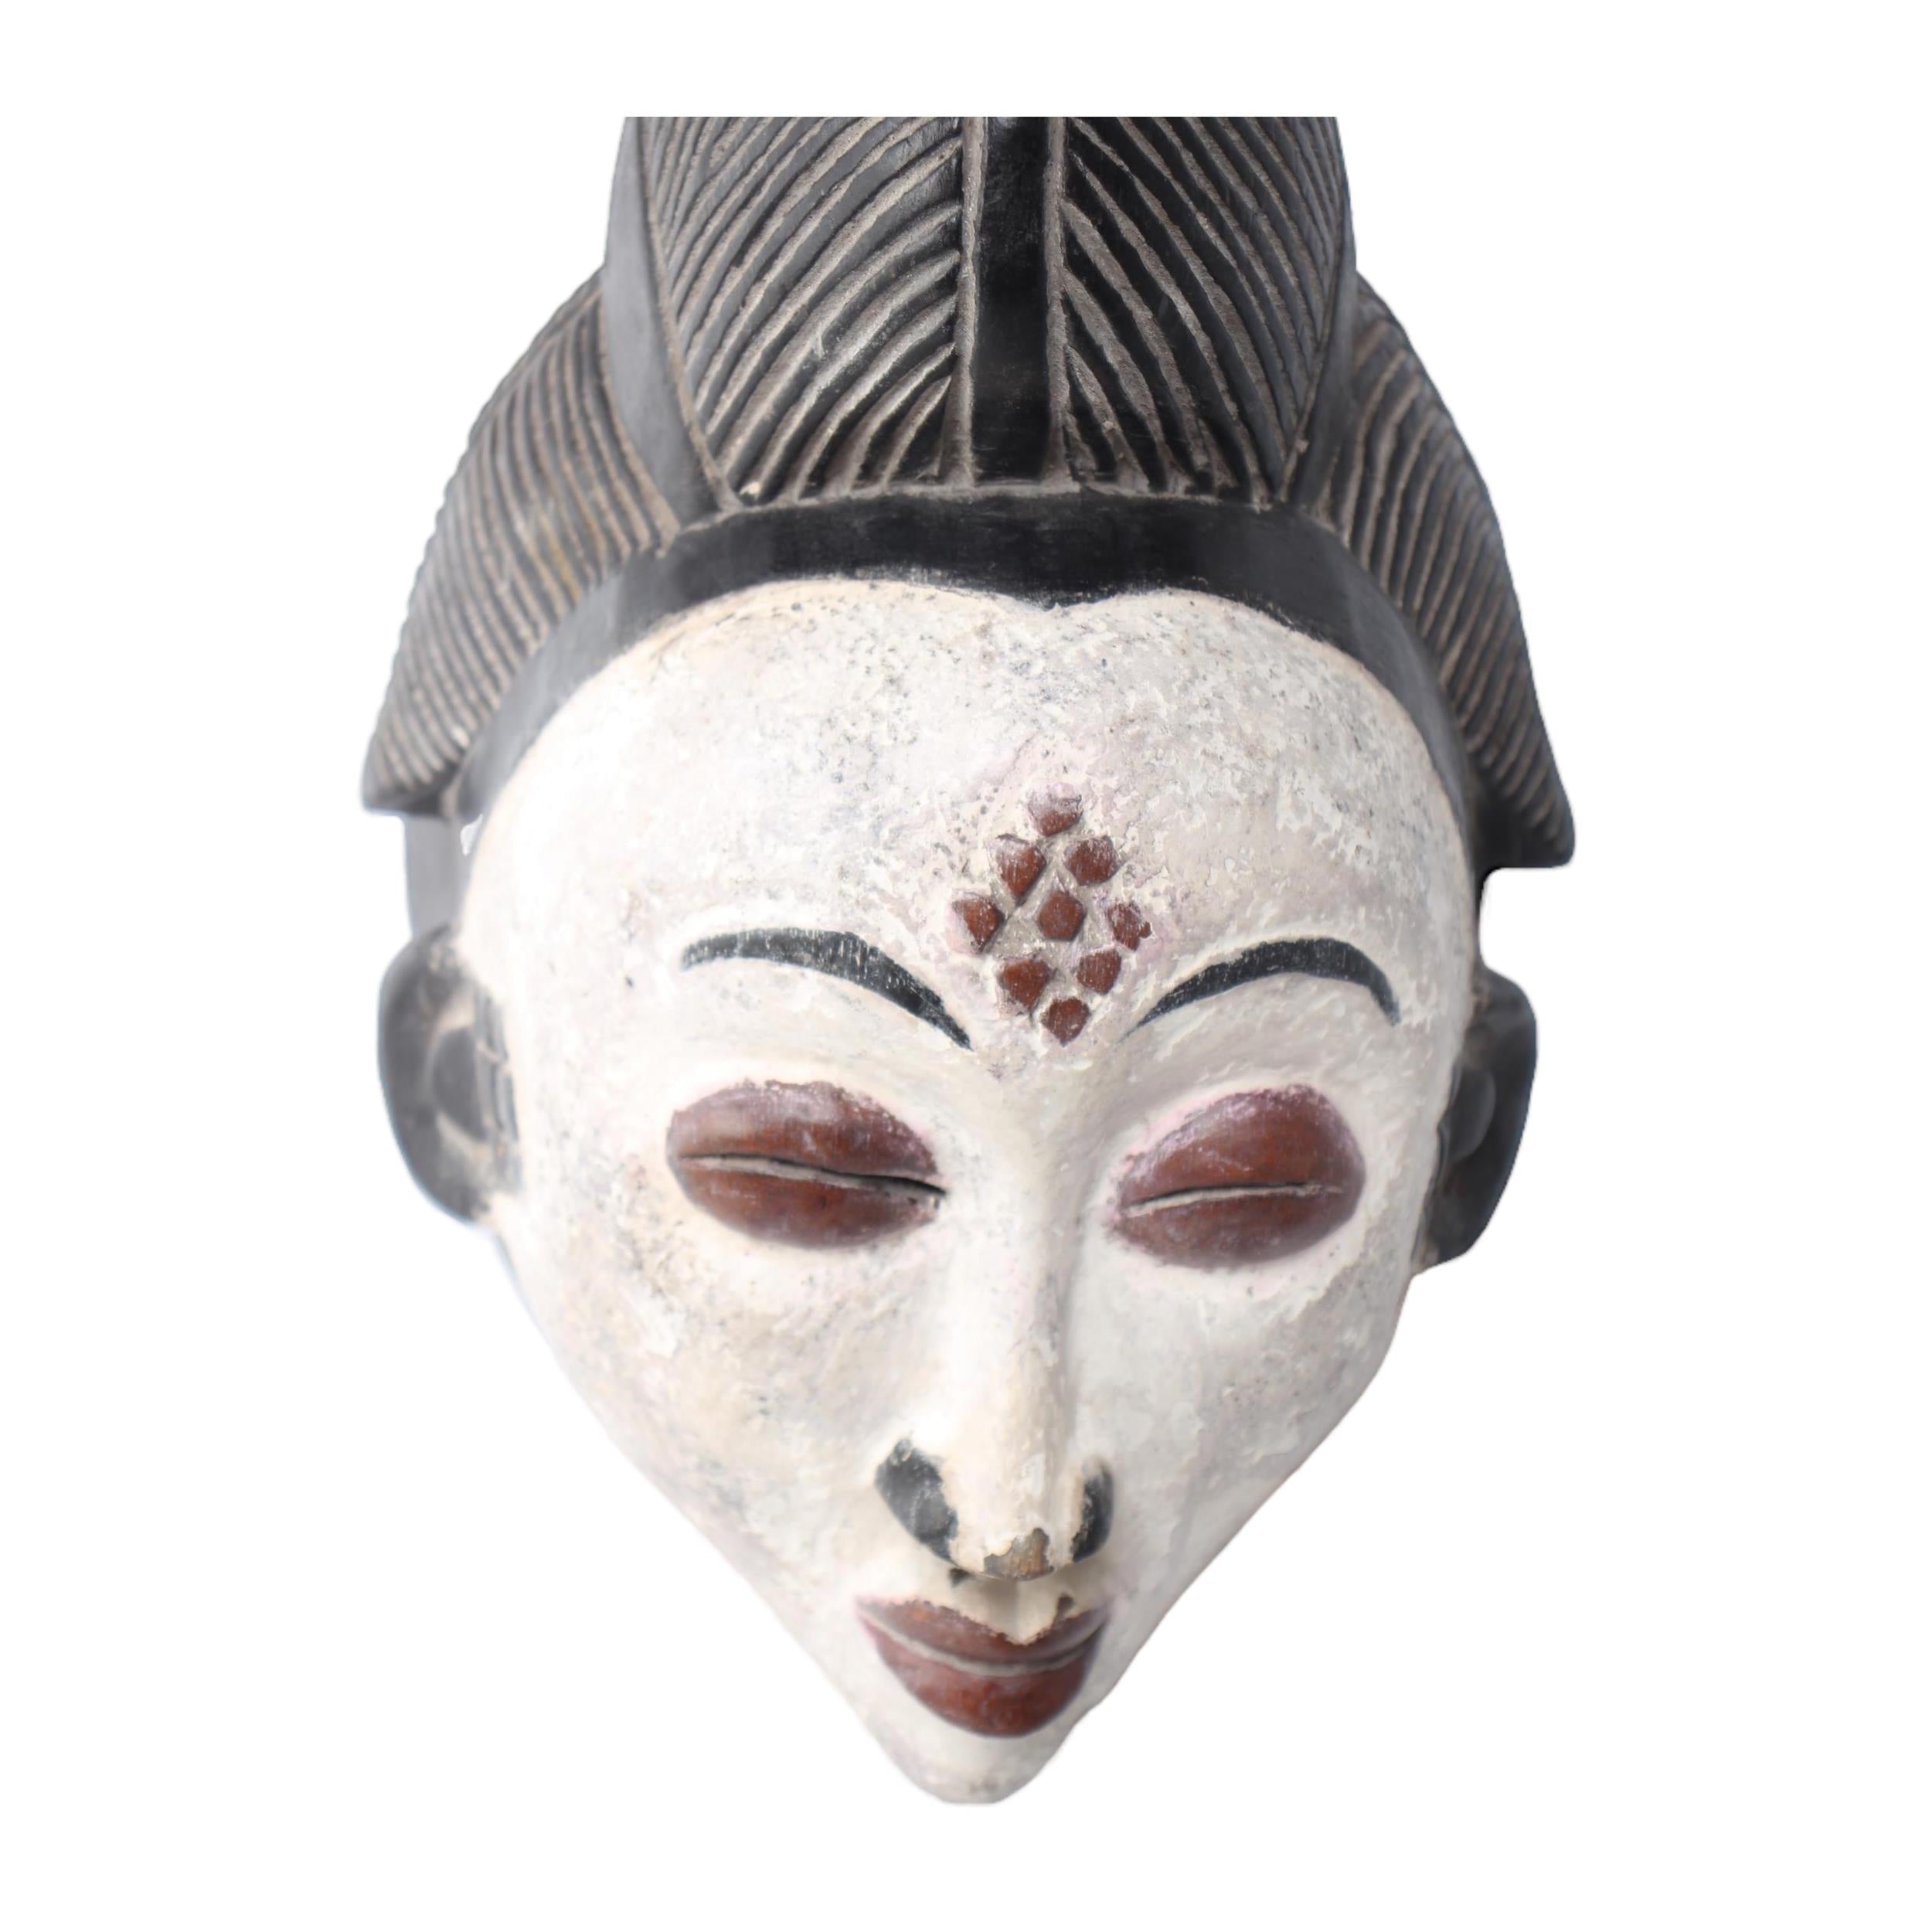 Punu Tribe Mask ~14.6" Tall